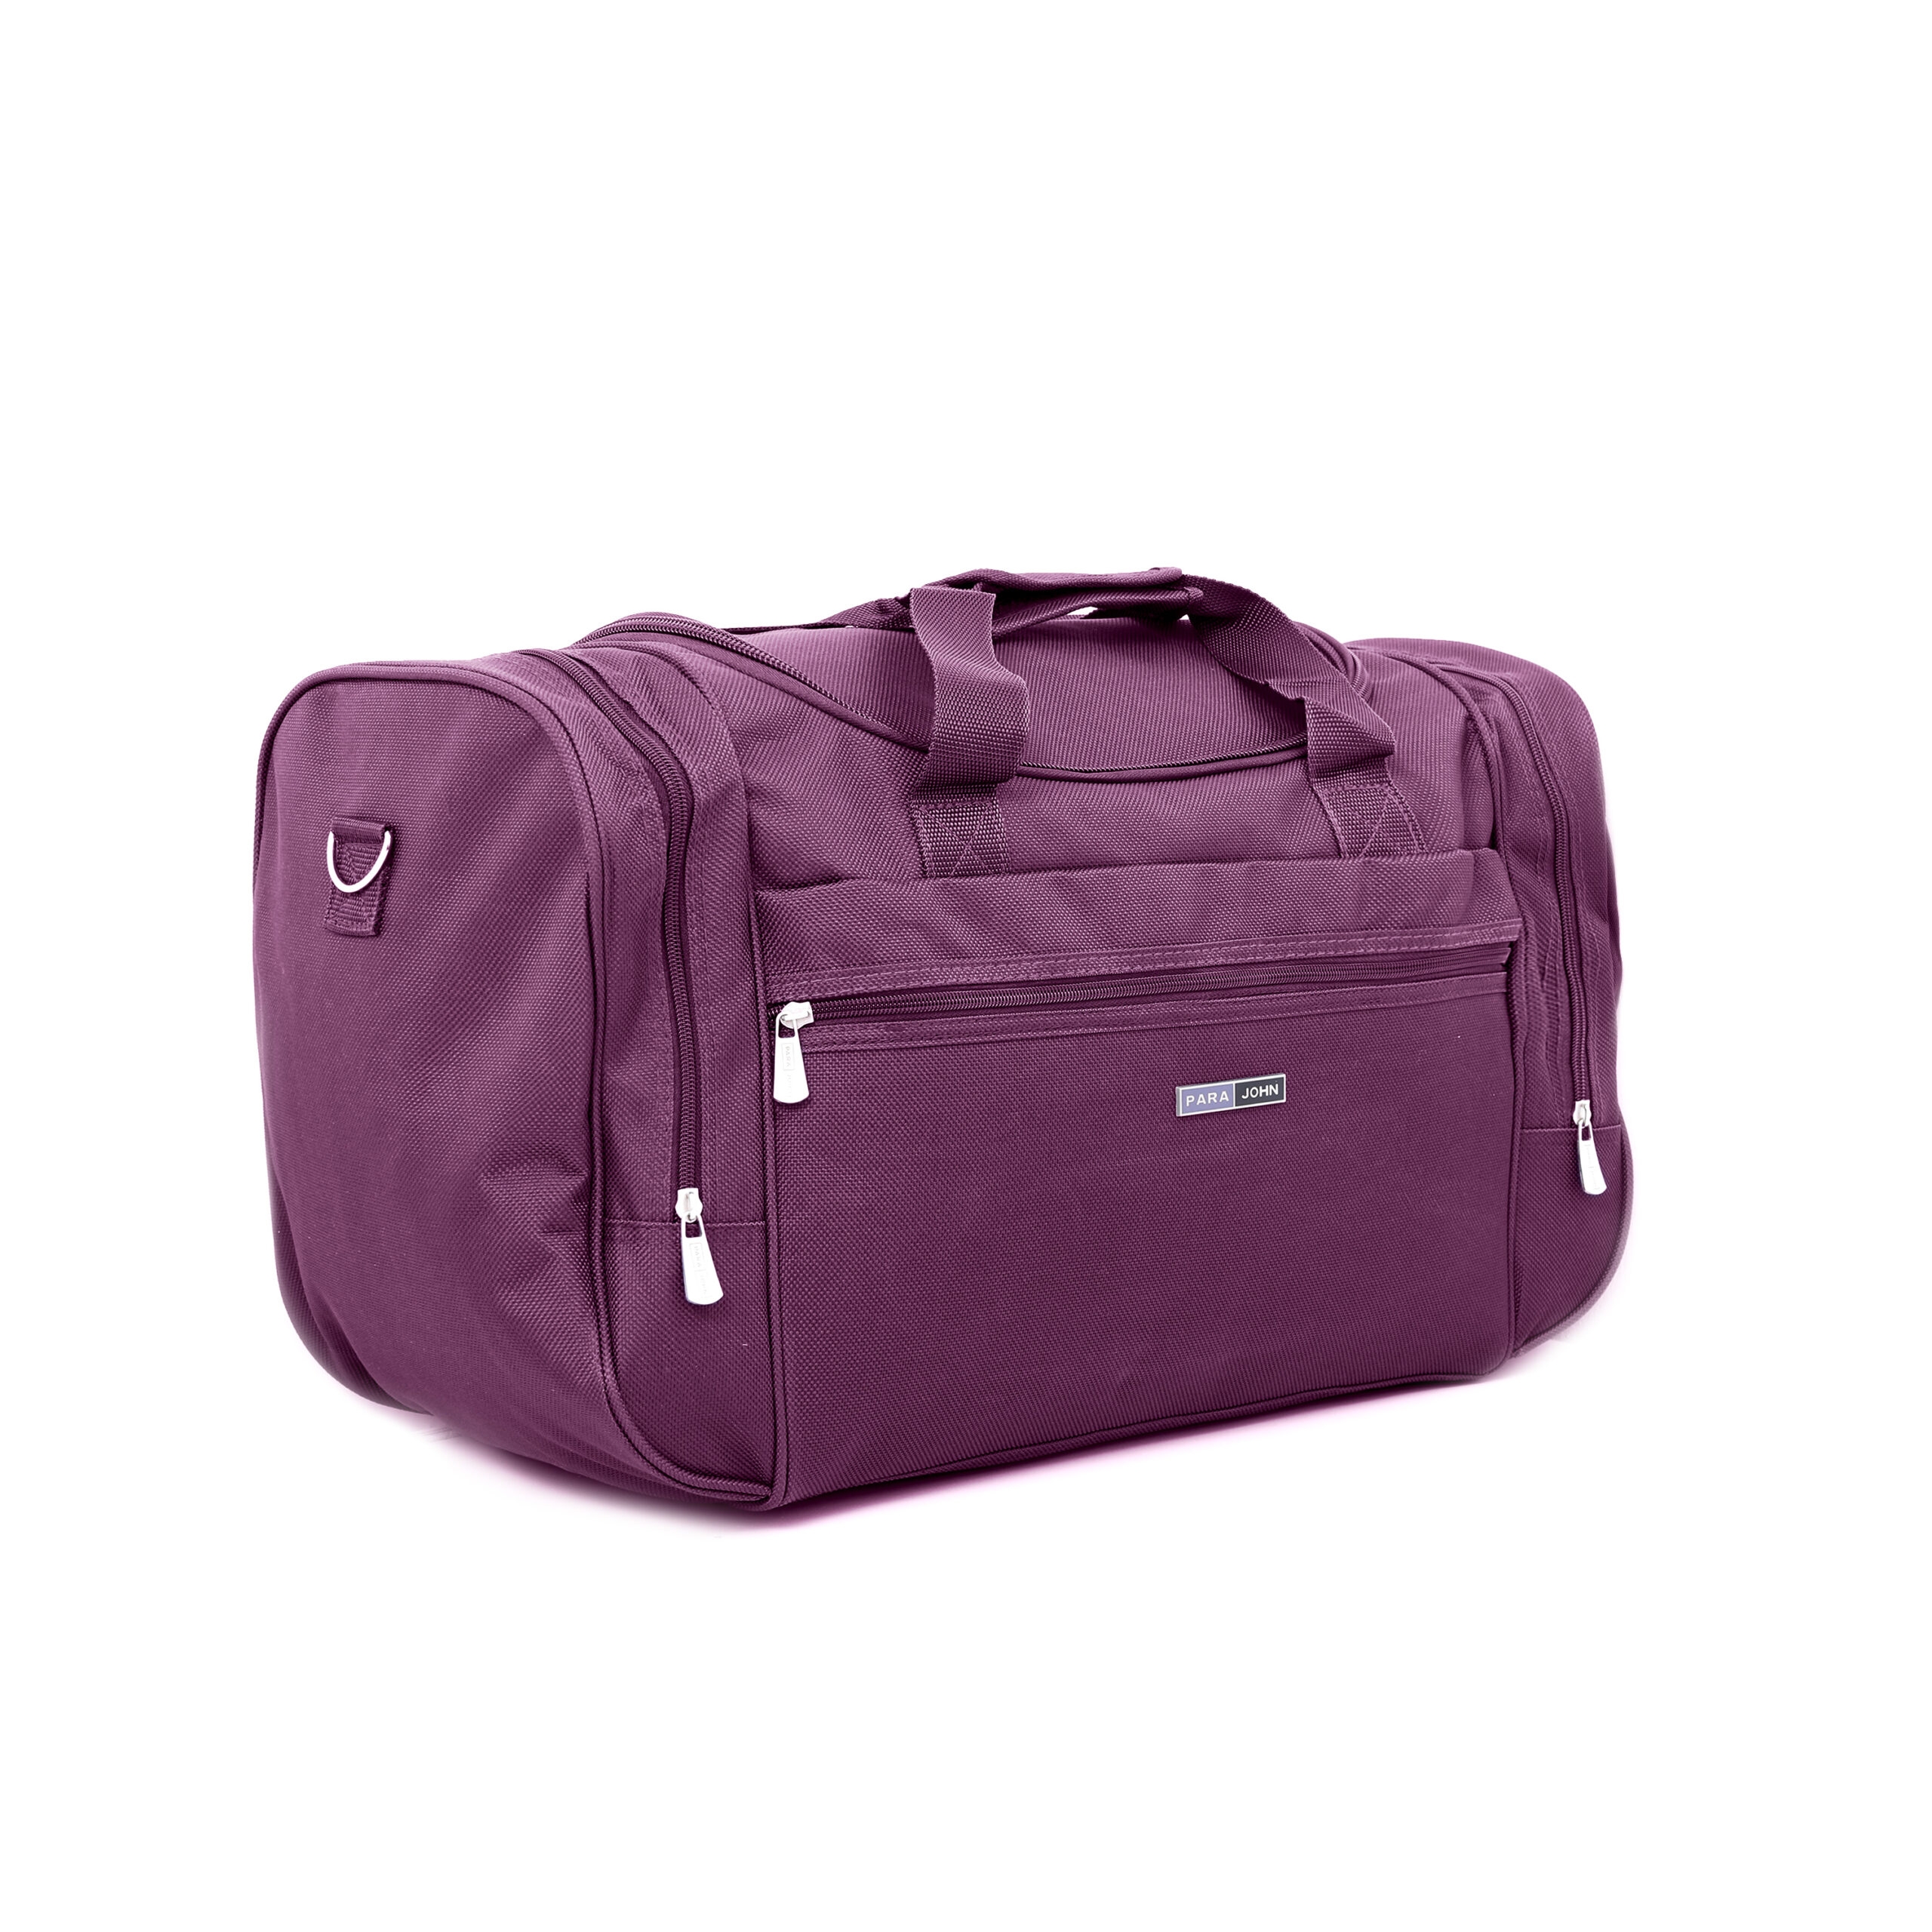 شنطة سفر (حقيبة سفر) – بنفسجي  PARA JOHN Duffle Bag/Travel Bag